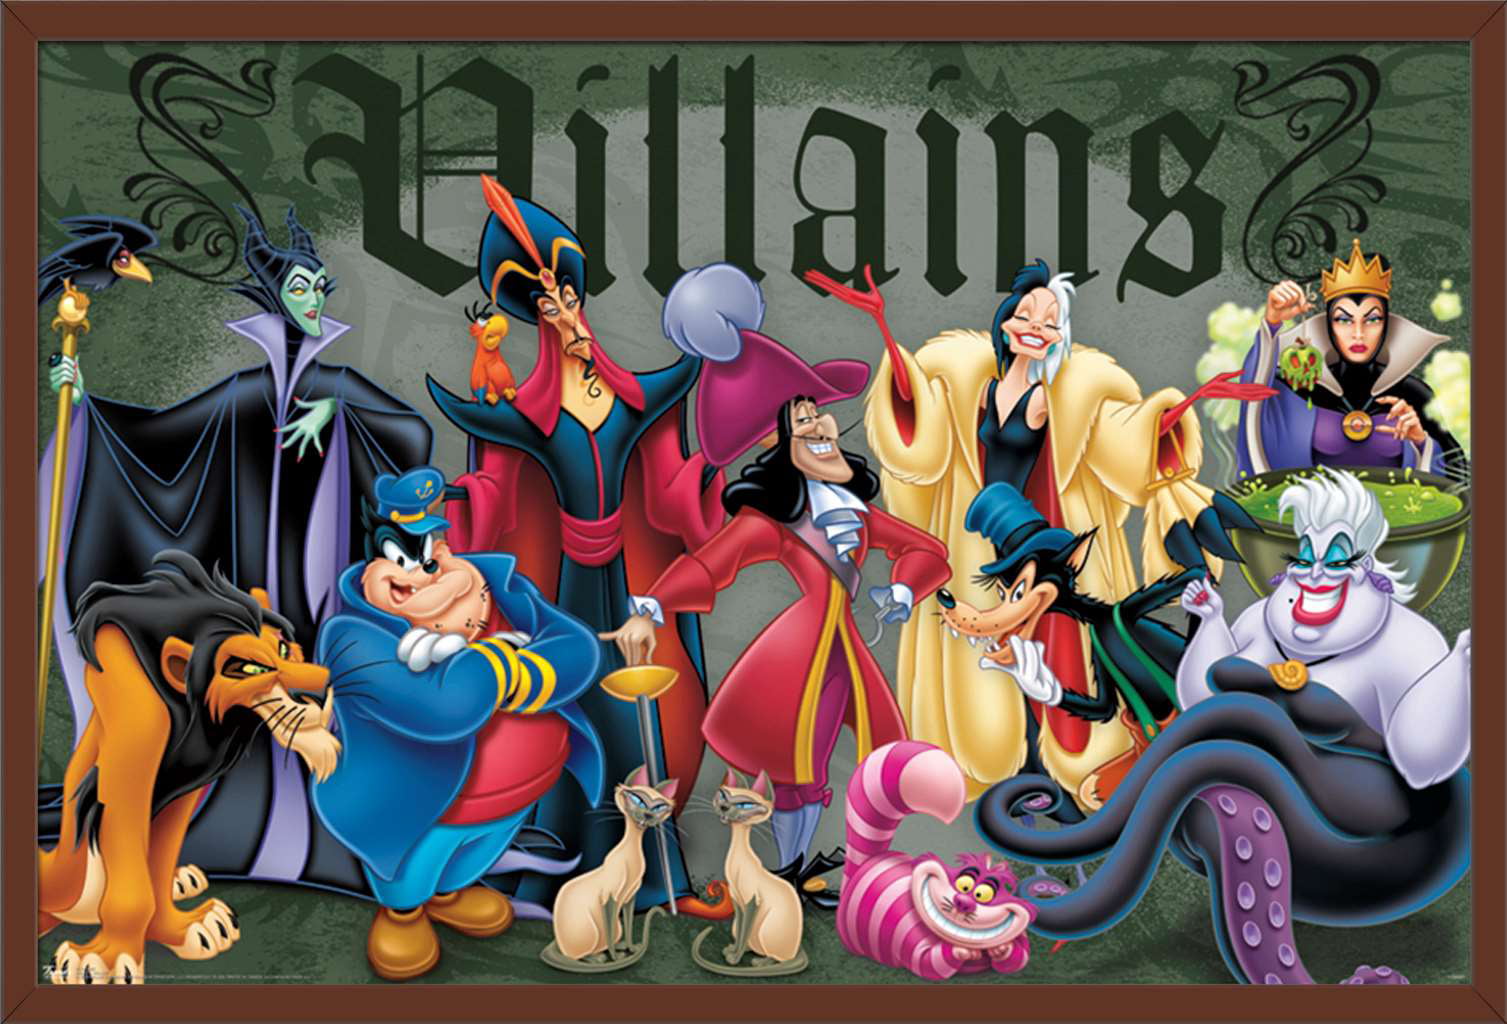 Disney Villains - Group Pose Wall Poster, 22.375" x 34", Framed